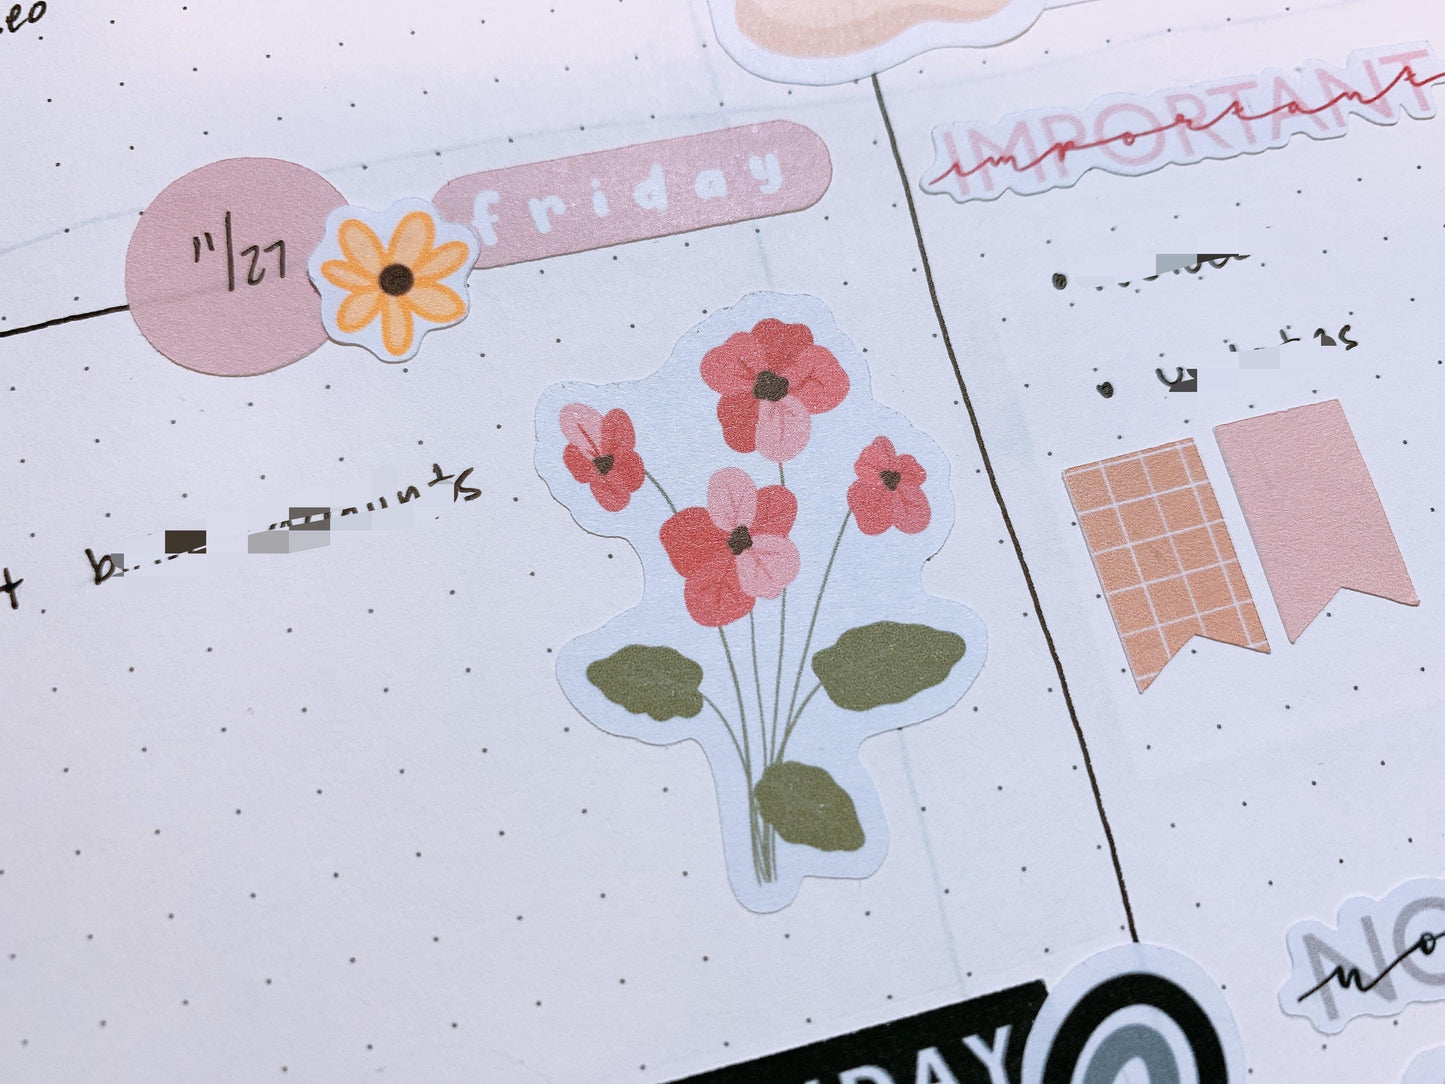 Flower Garden Sticker Sheet